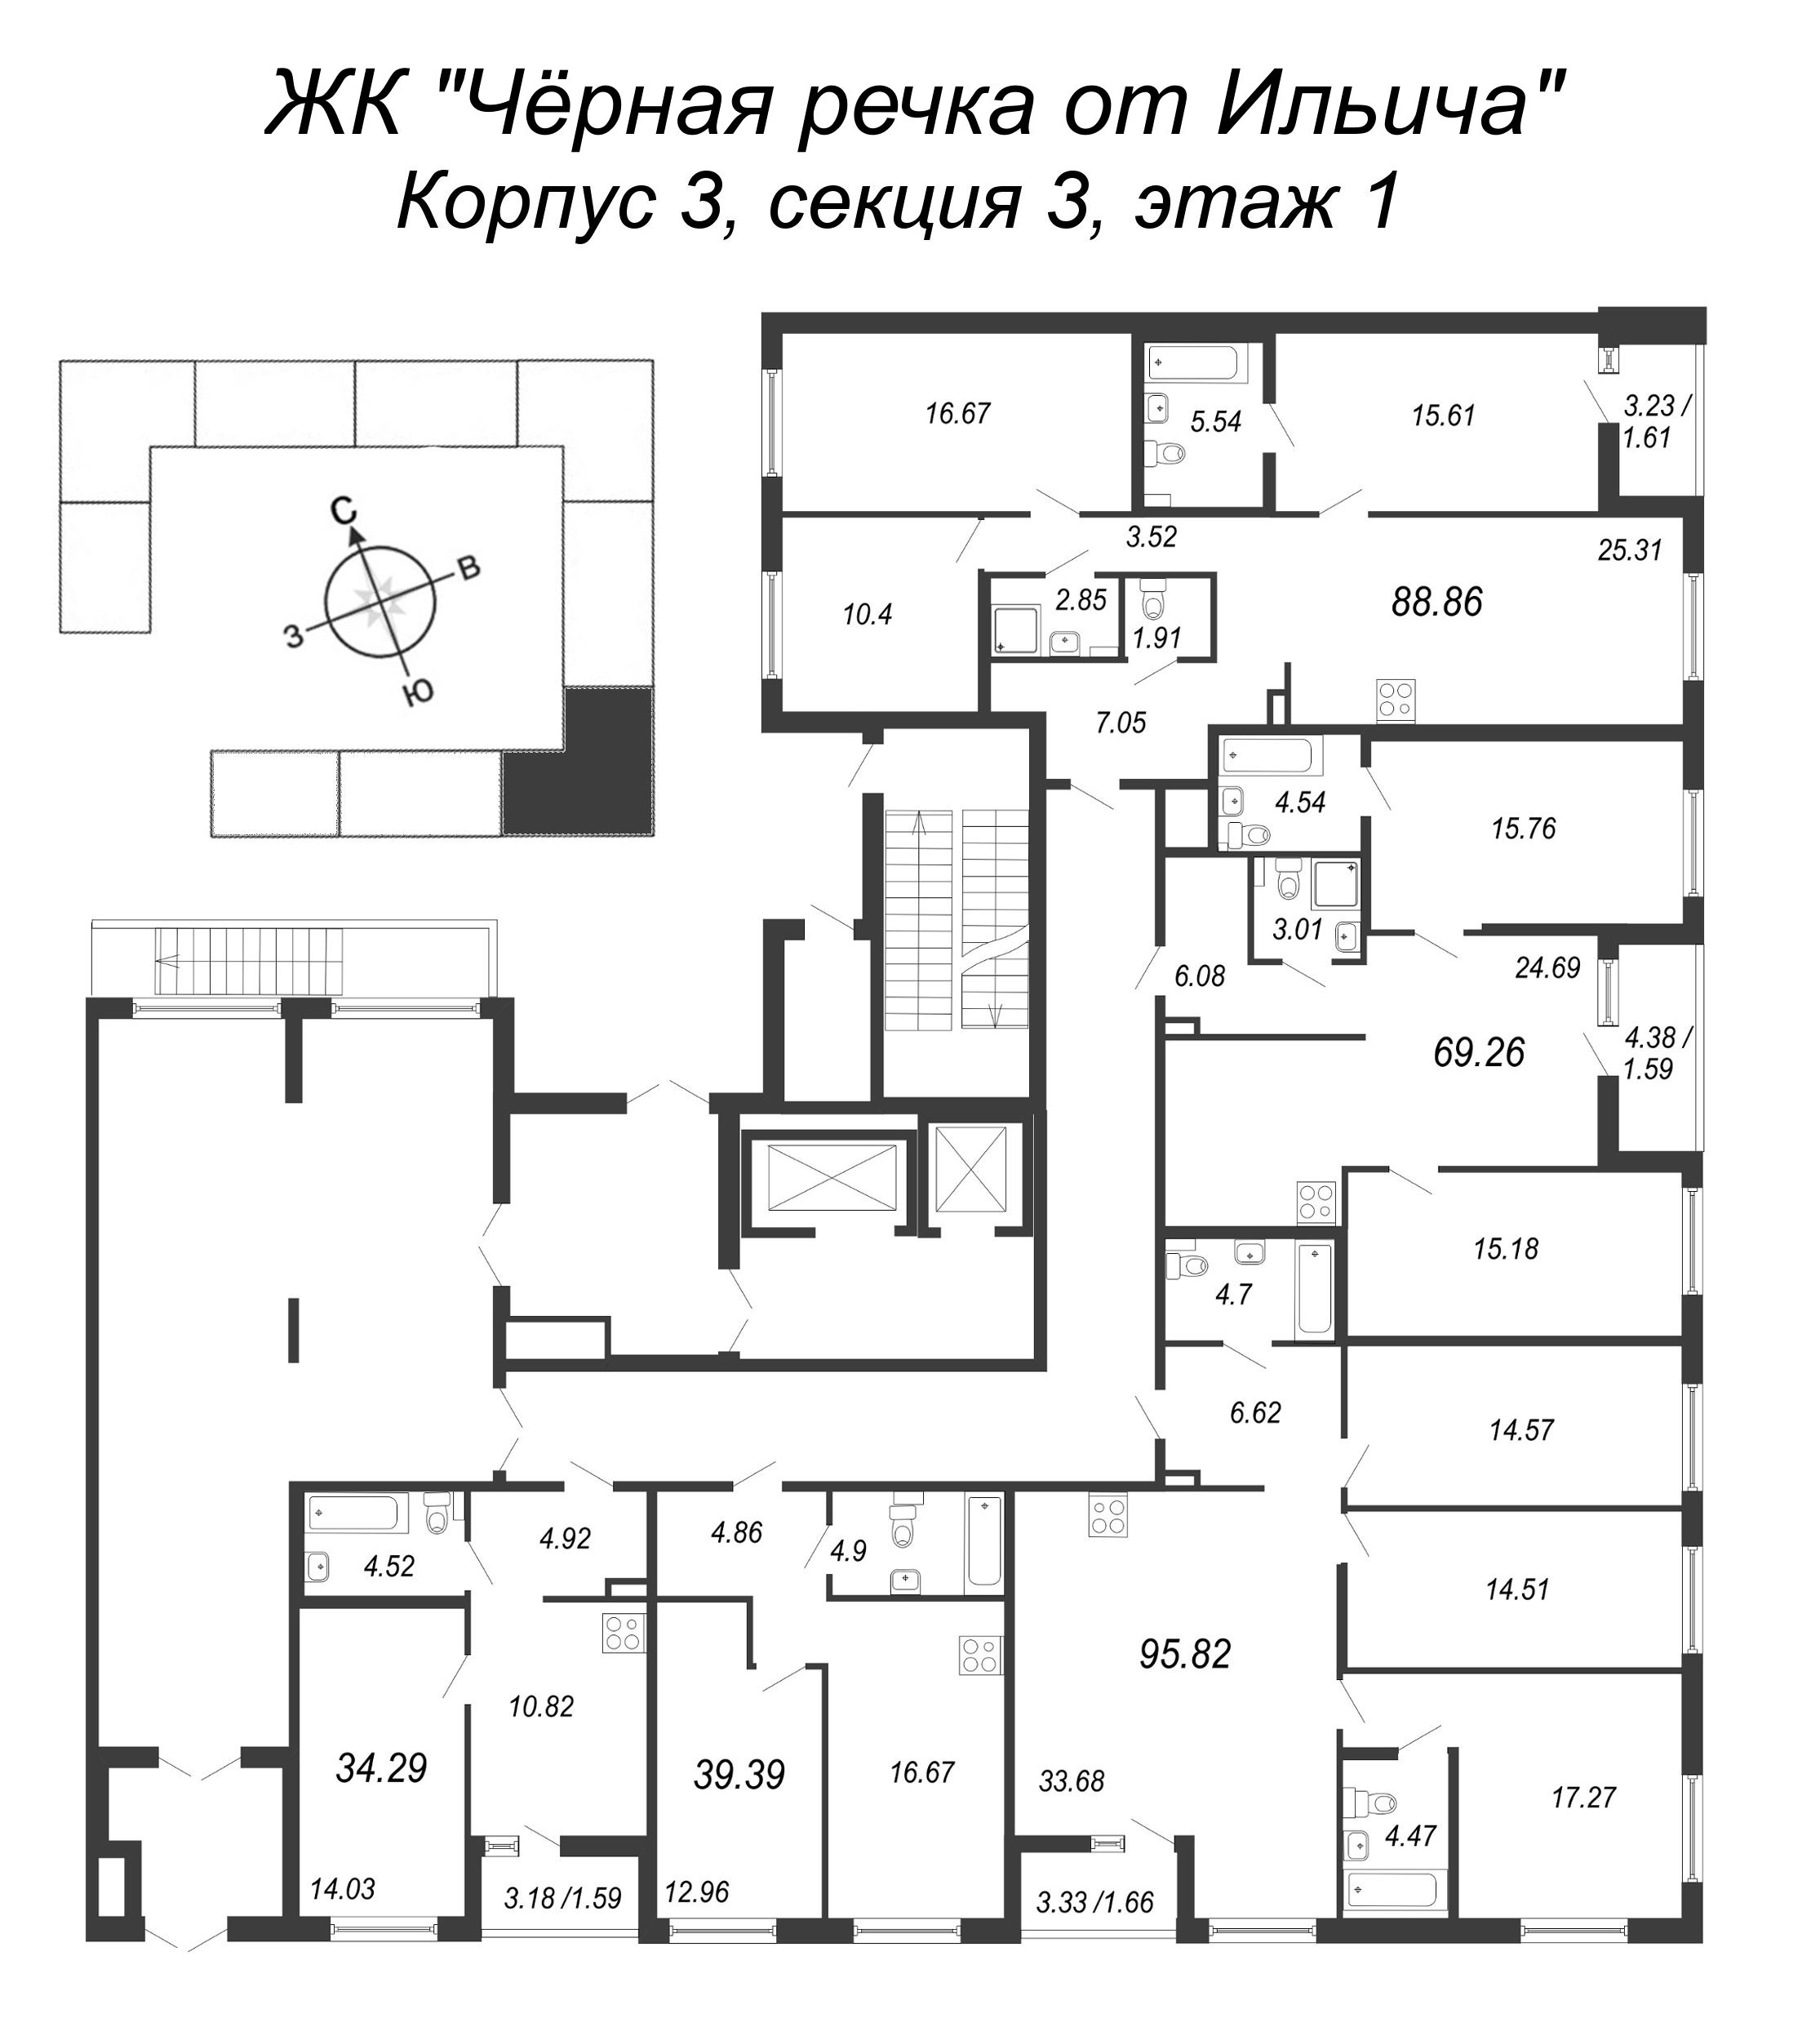 2-комнатная (Евро) квартира, 39.39 м² в ЖК "Чёрная речка от Ильича" - планировка этажа